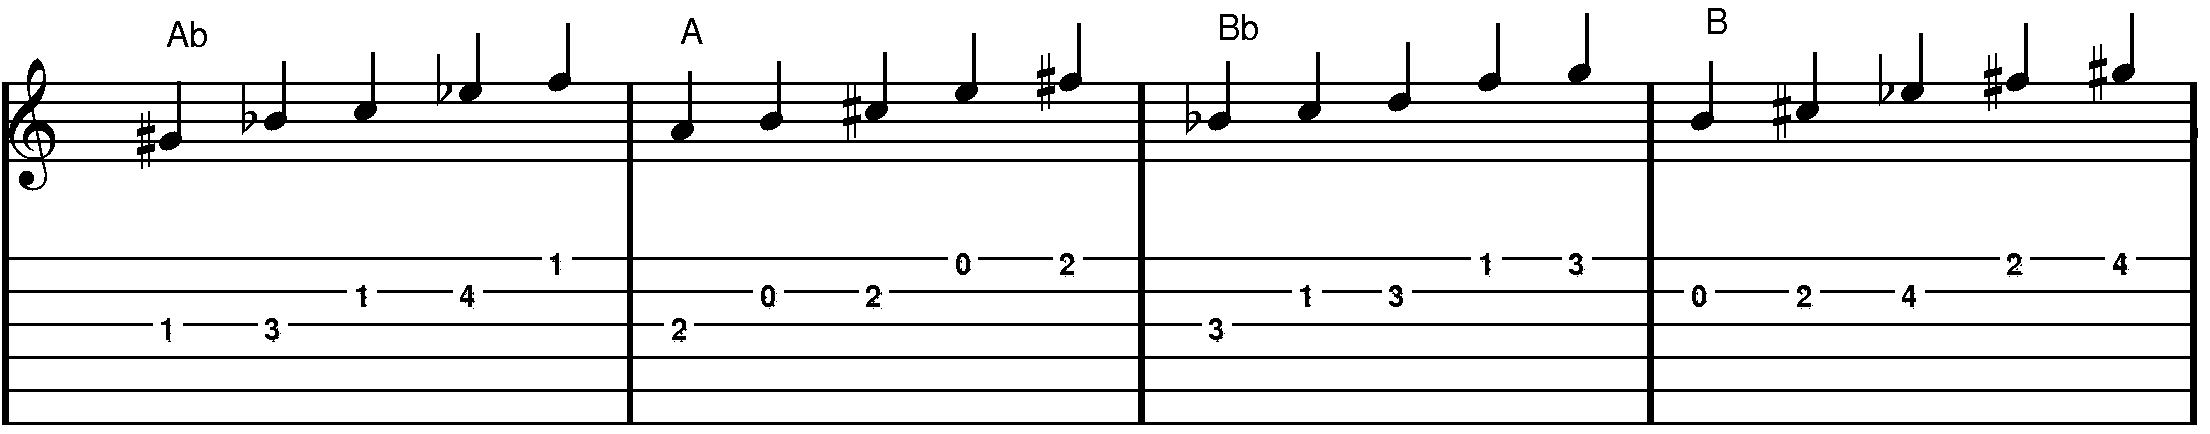 Major Pentatonic Scales Guitar in standard tuning Ab-B